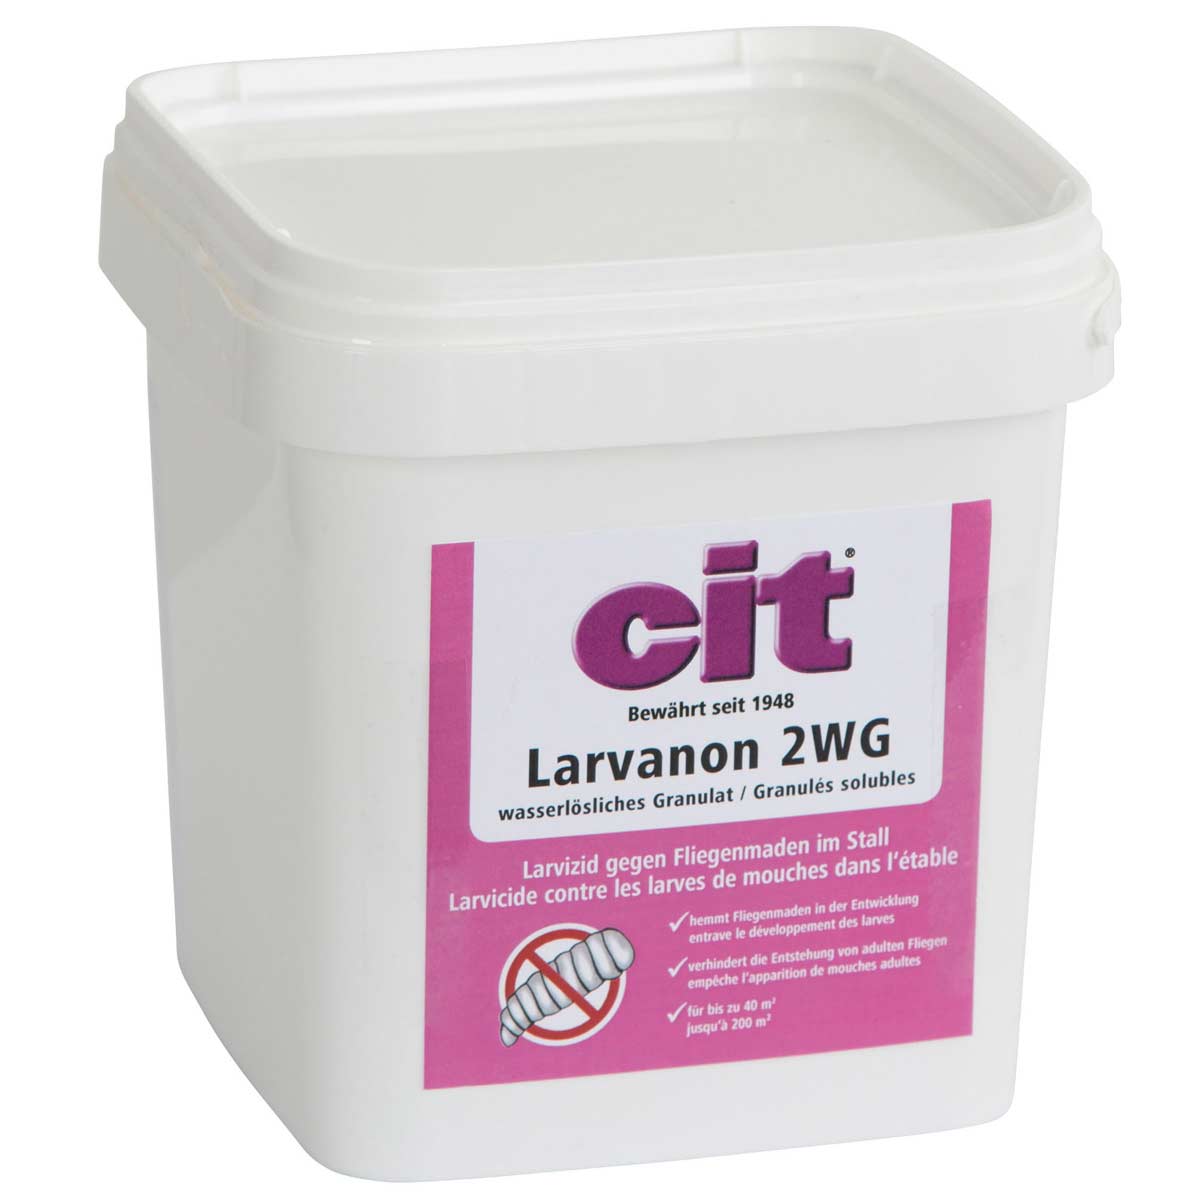 Cit Larvizid Larvanon 2 WG wasserlösliches Granulat